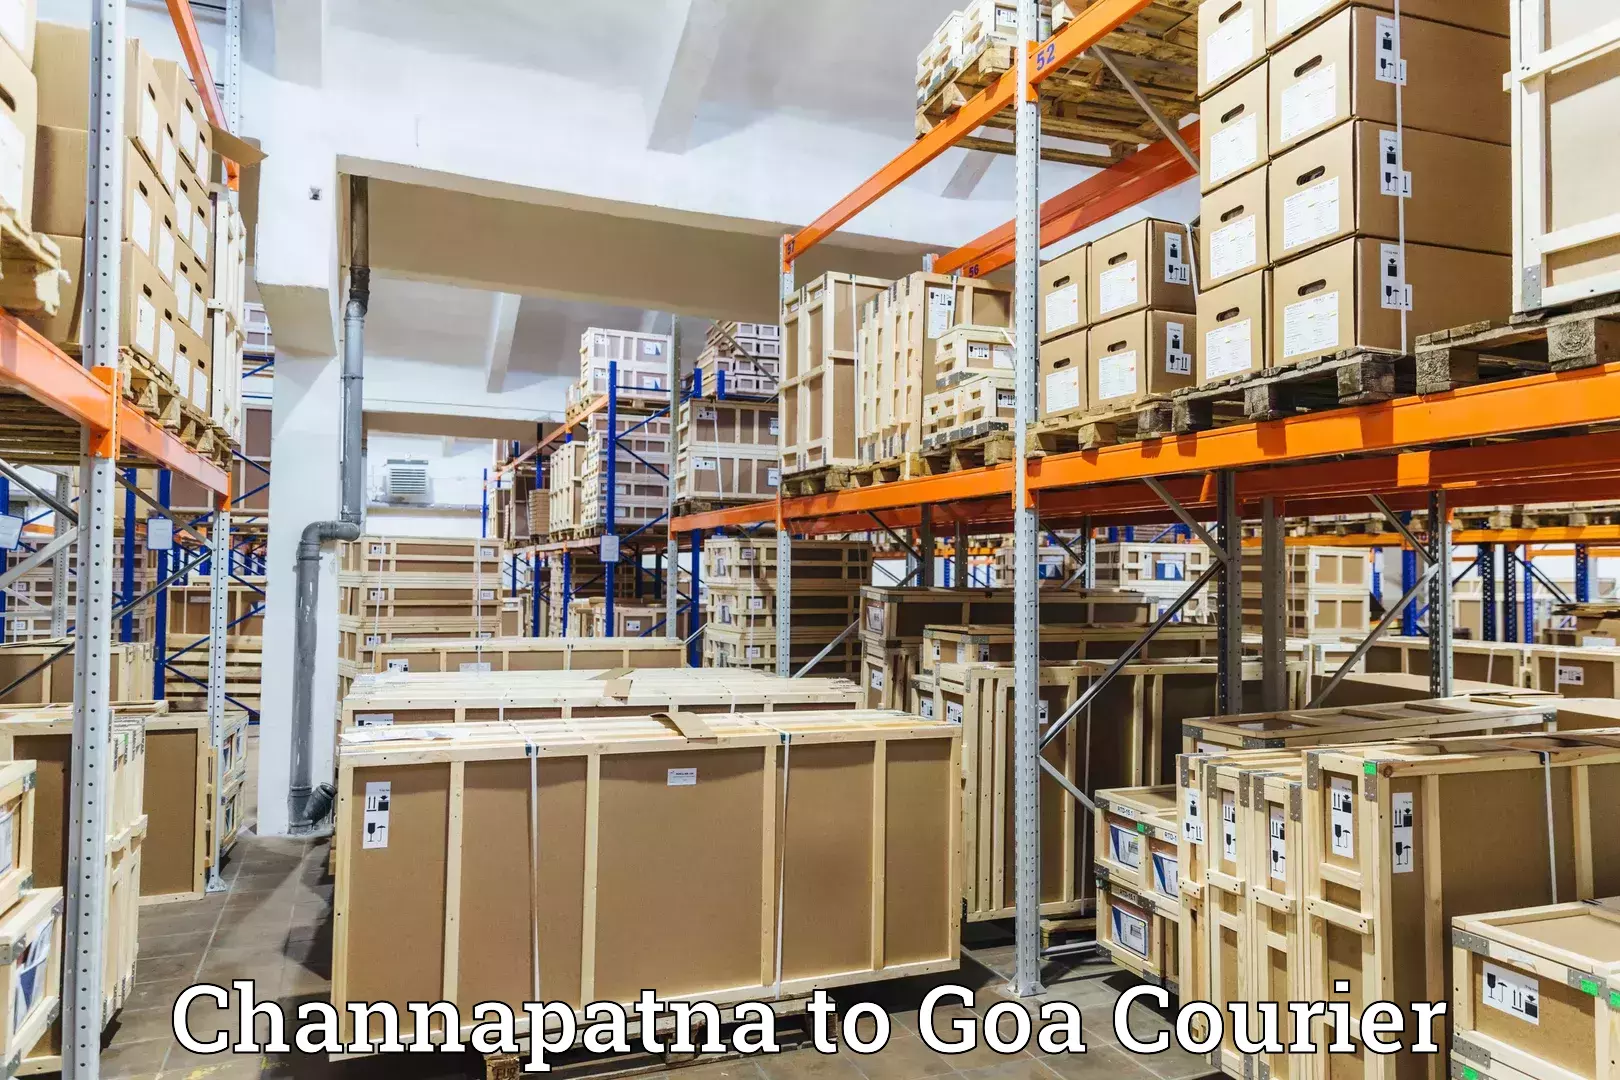 Courier service comparison Channapatna to Goa University